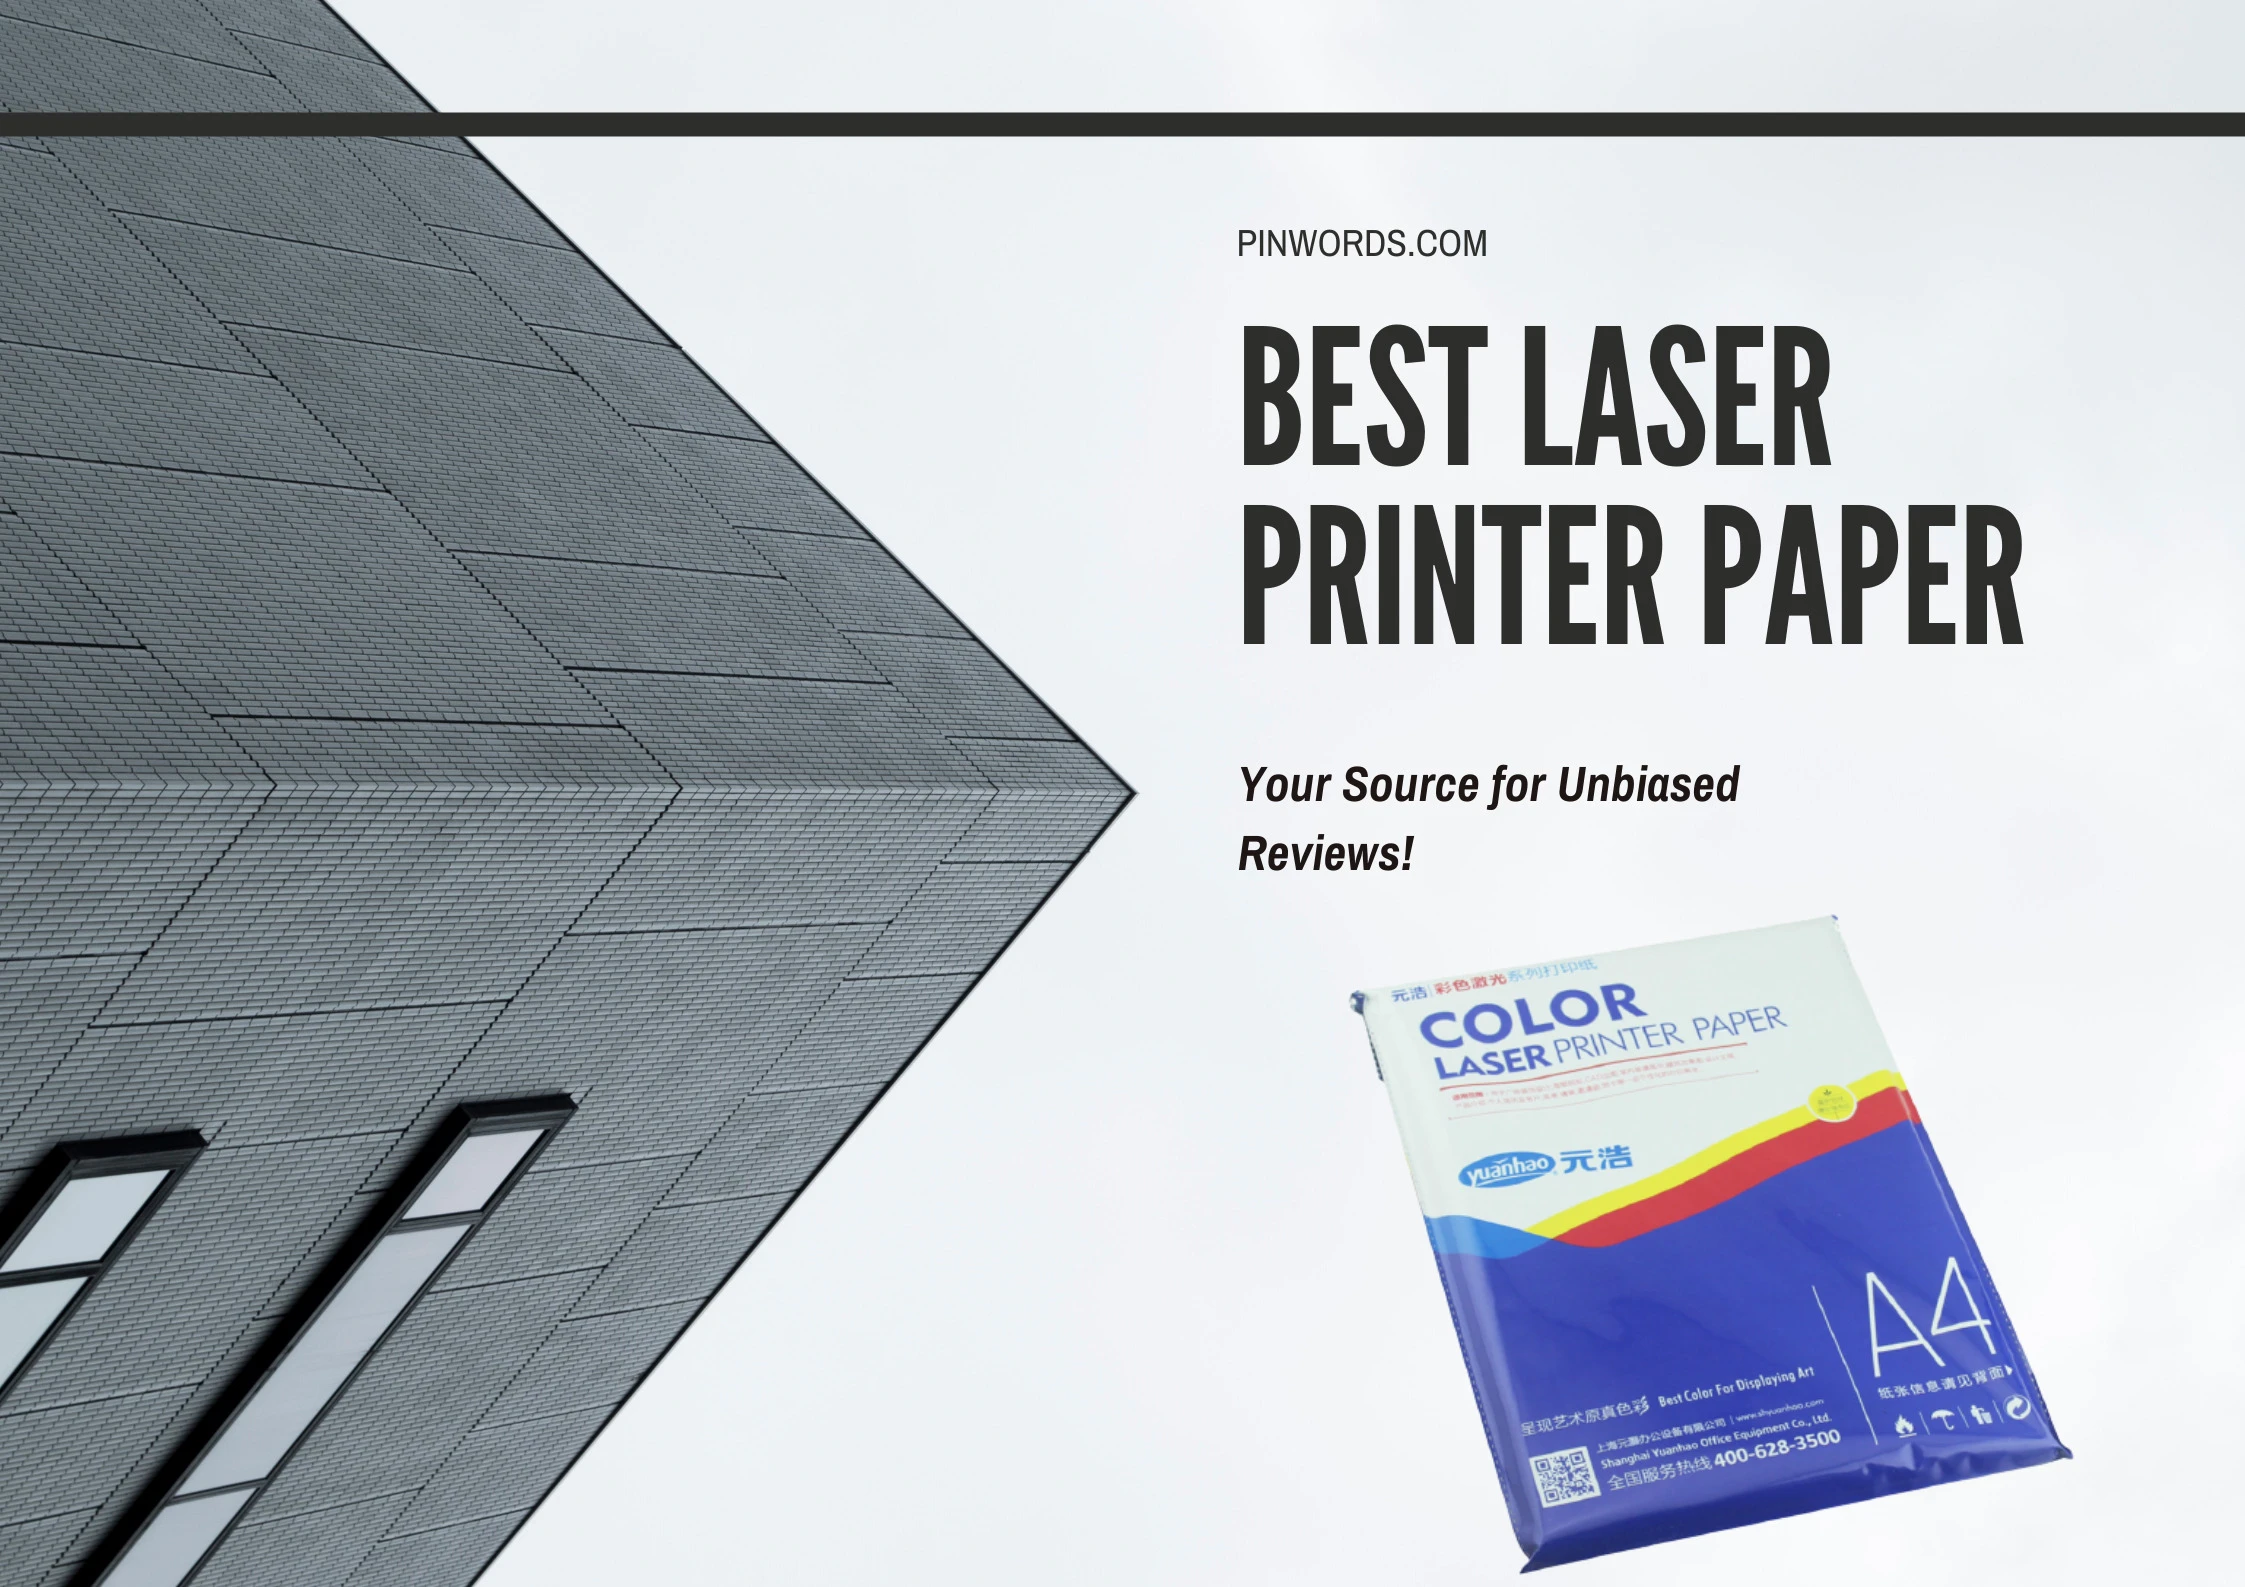  Best Laser Printer Paper Reviews  